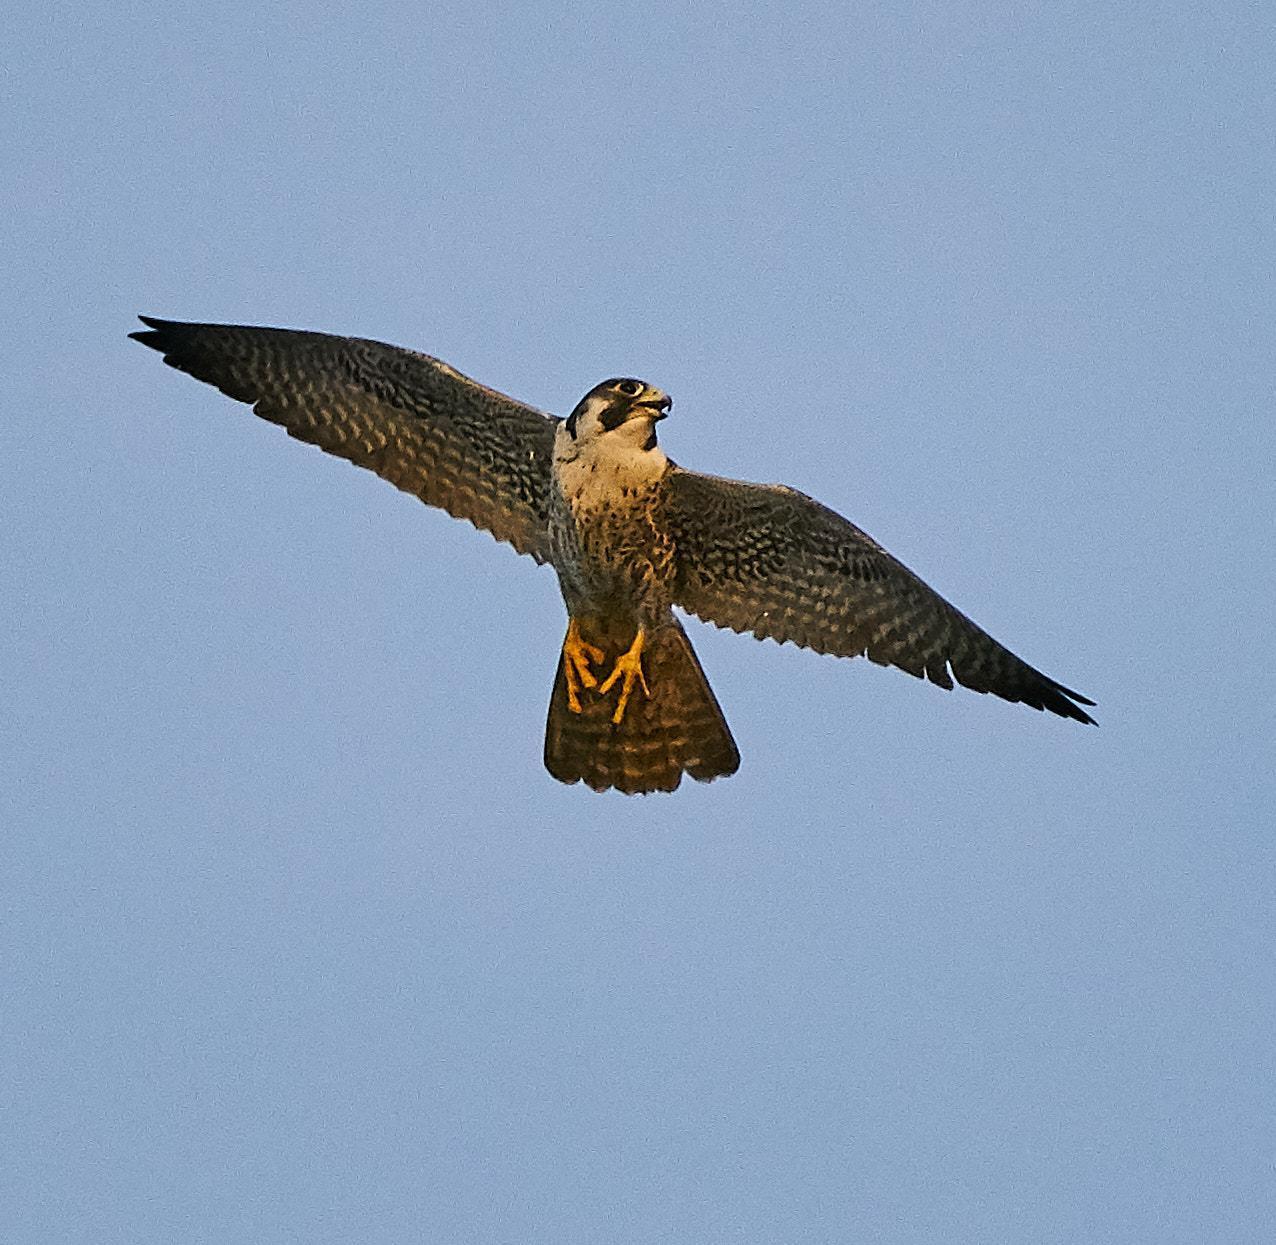 Peregrine Falcon Photo by Steven Cheong